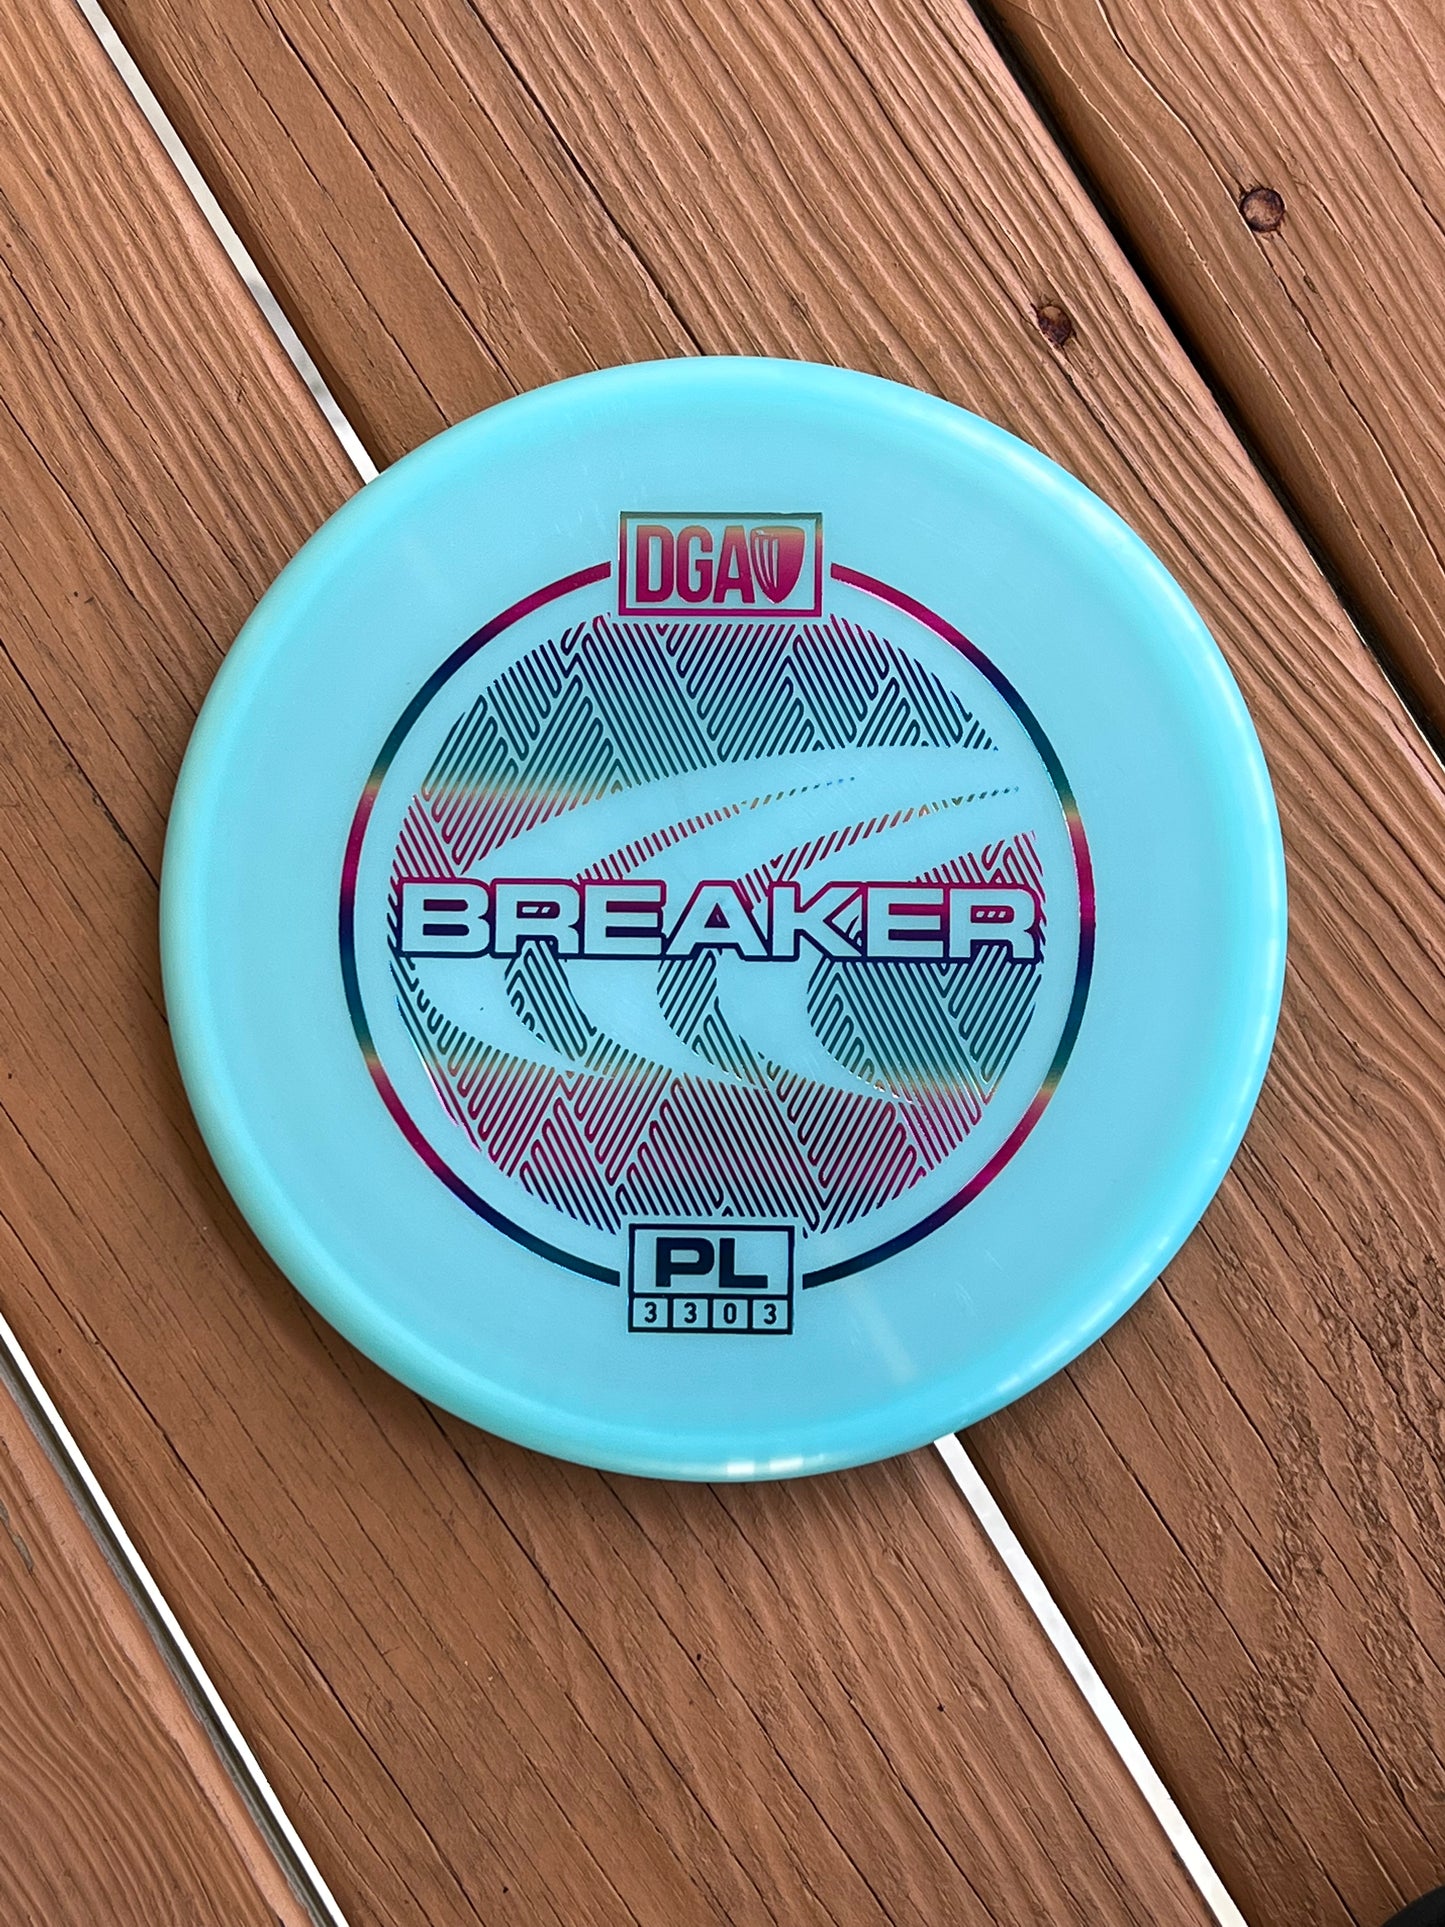 Proline Breaker